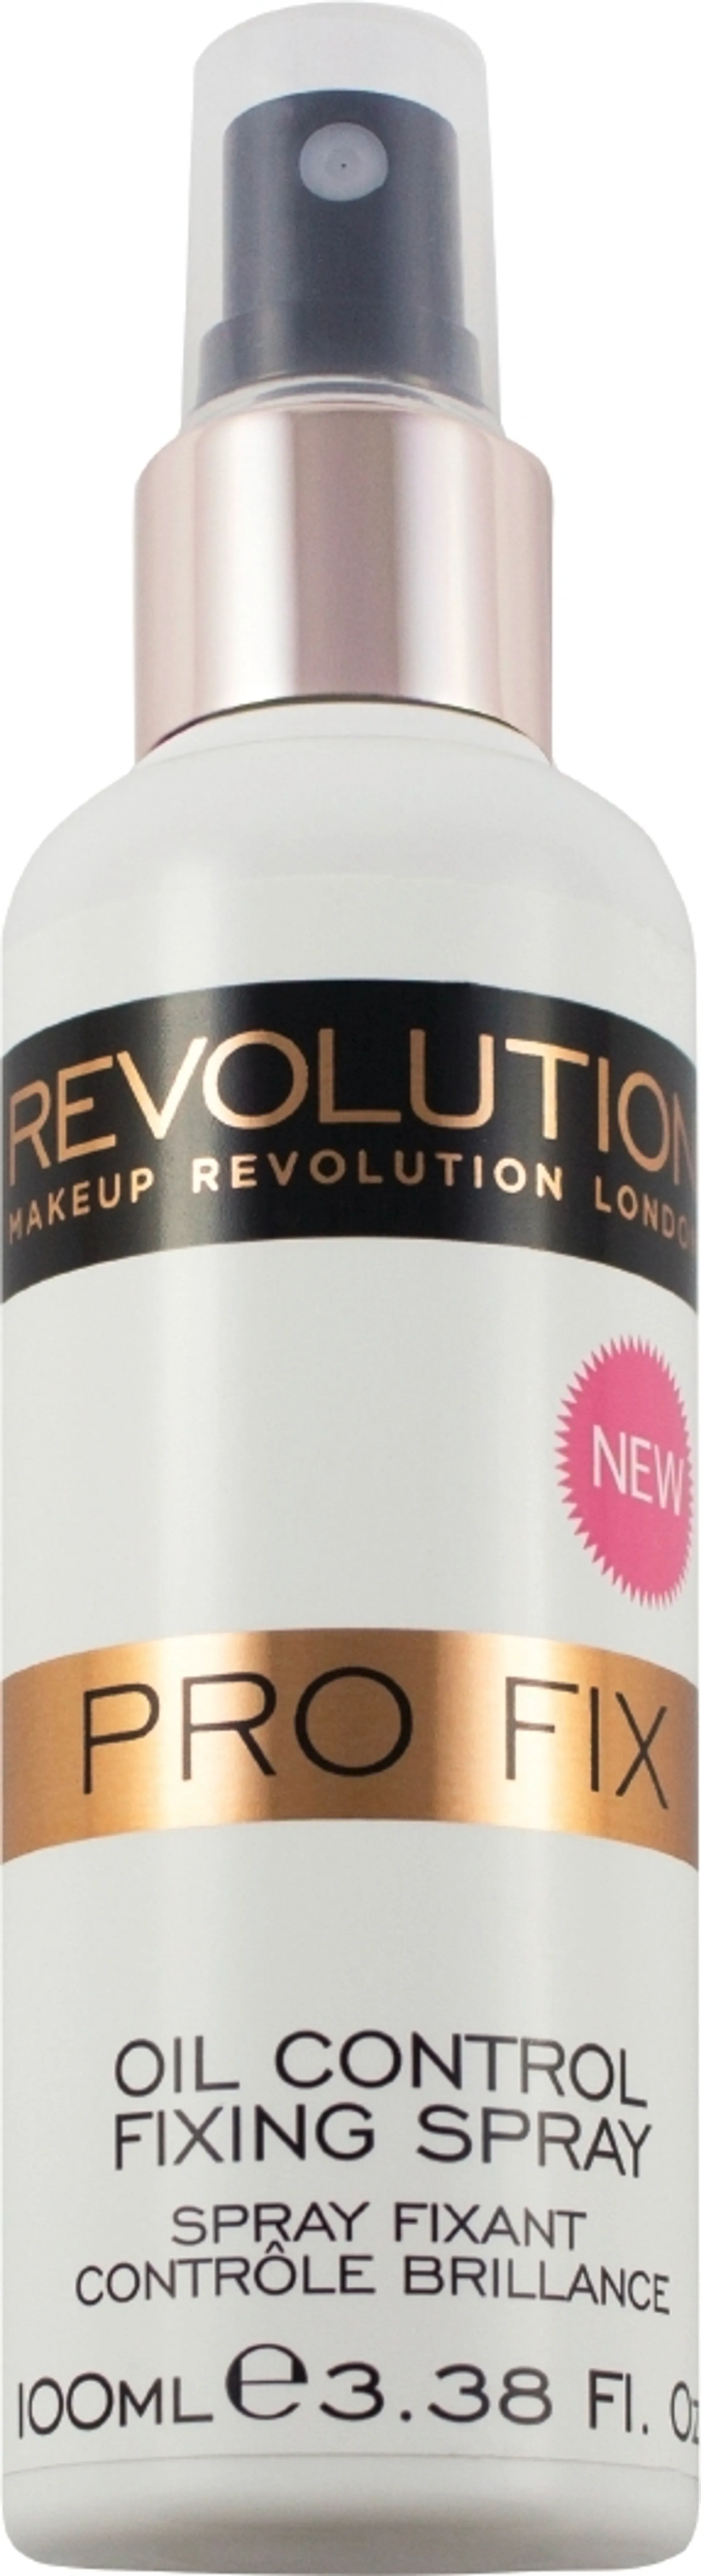 Makeup Revolution 100ml Pro Fix Oil Control Fixing Spray meikinkiinnityssuihke - 1